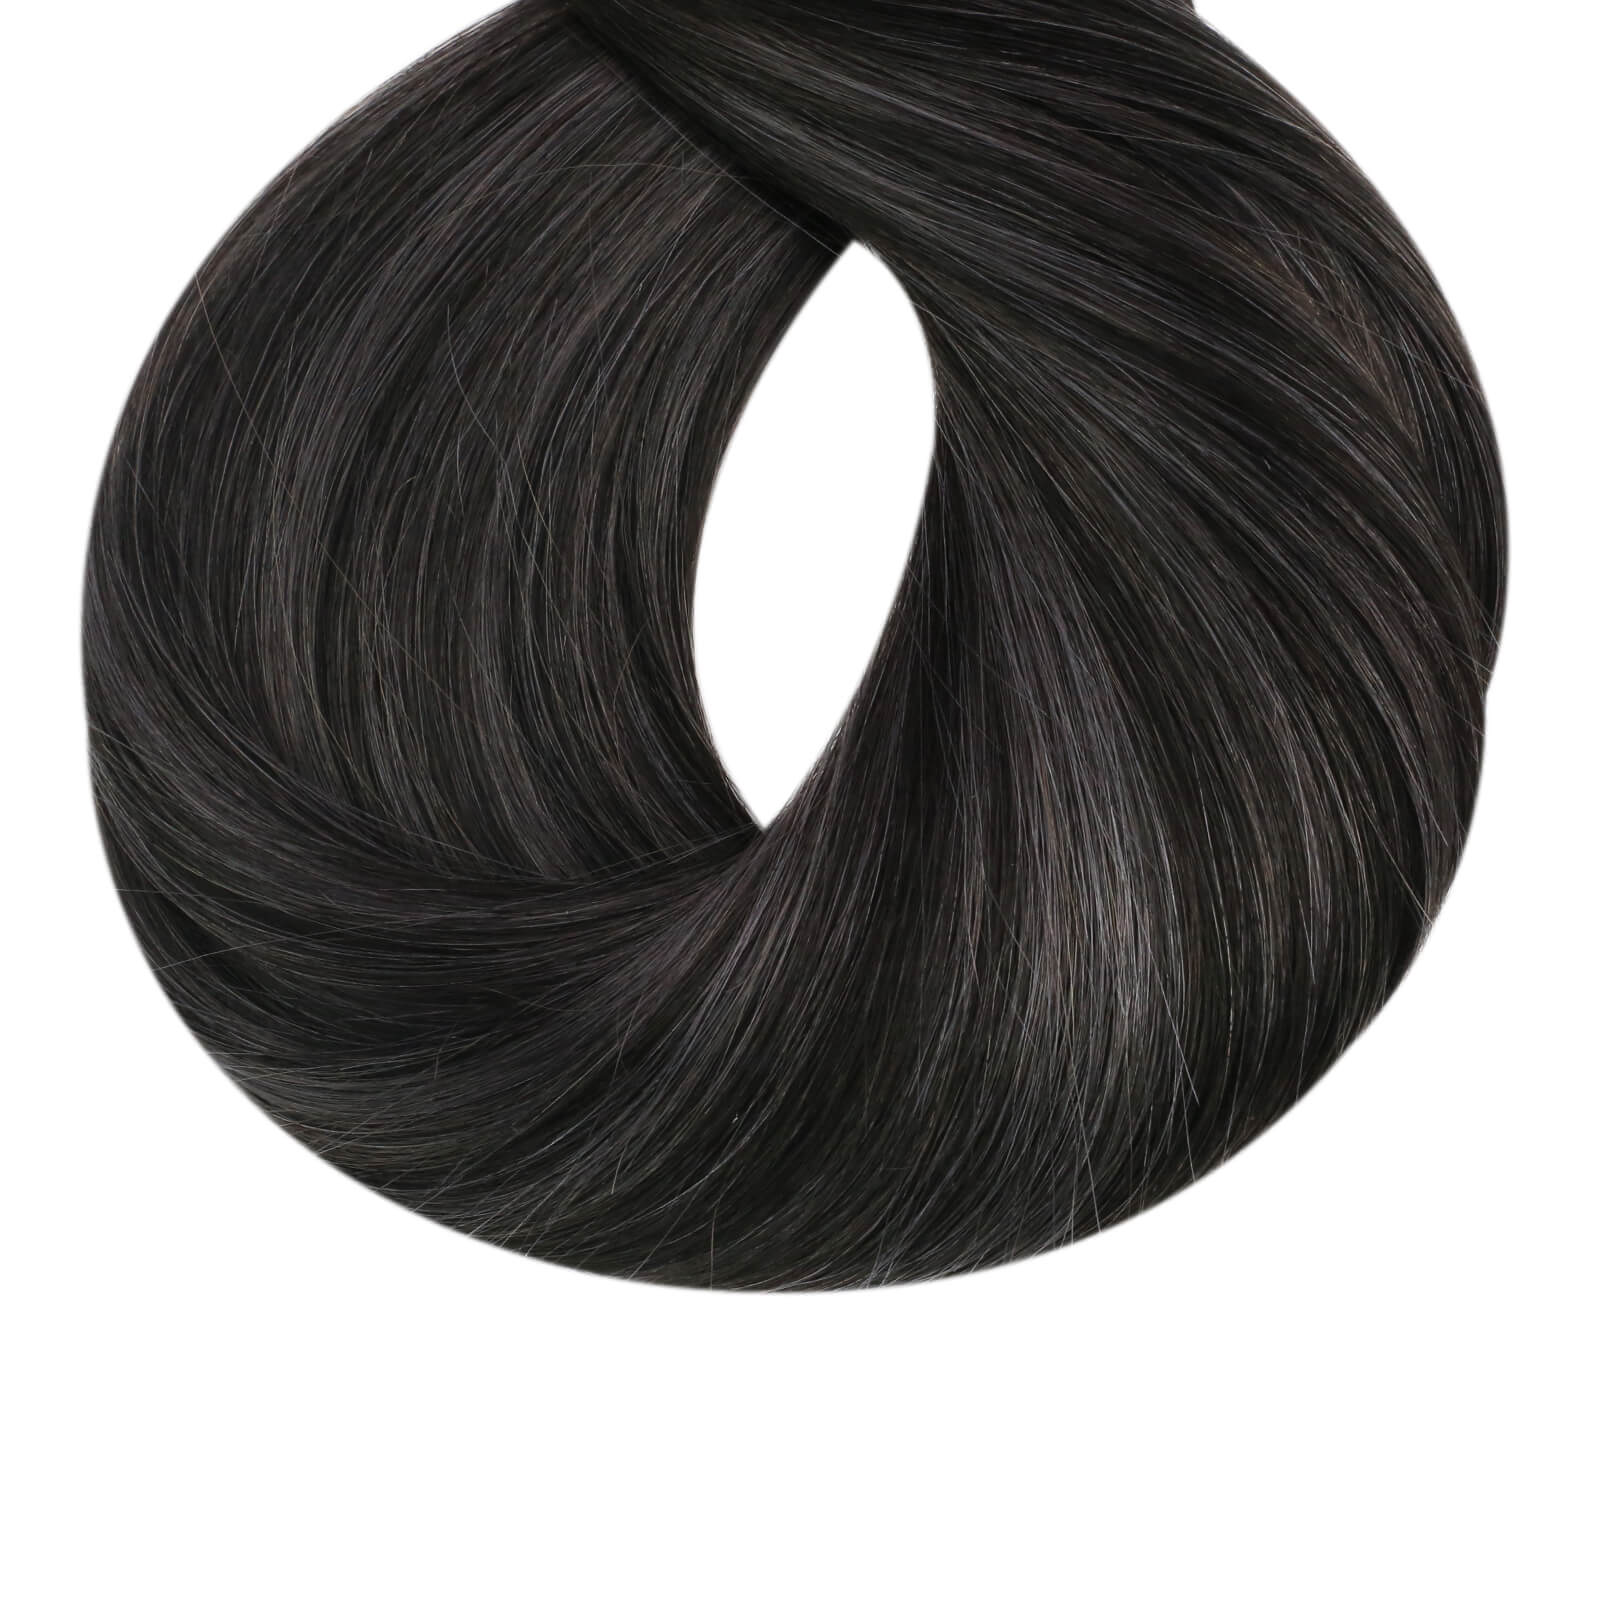 thick end virgin tape in hair extensions real hair best selling hair